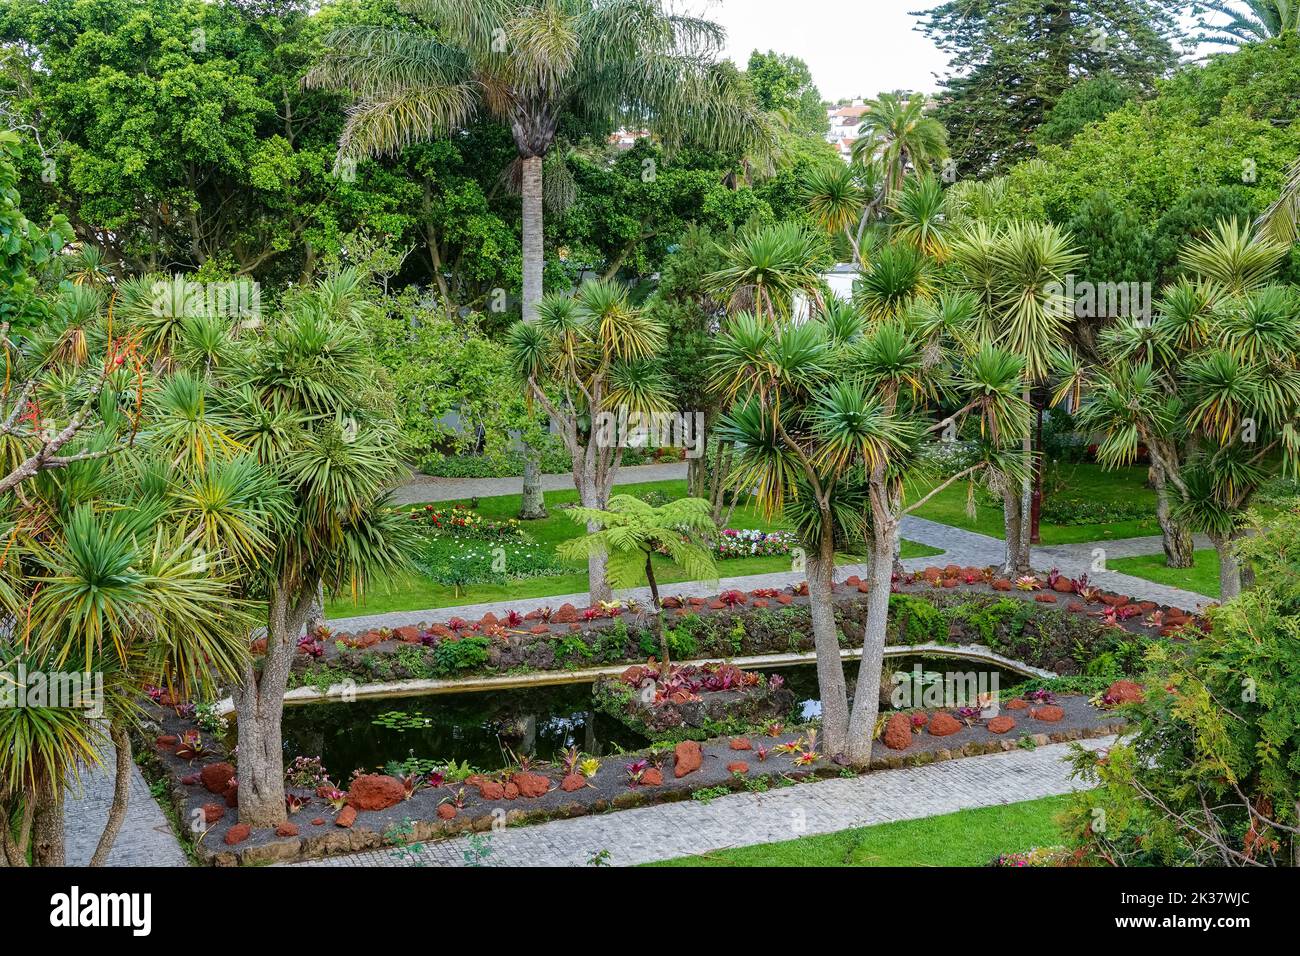 The Duke of Terceira Gardens, Jardim Duque da Terceira, a public formal garden in Angra do Heroismo, Terceira Island, Azores, Portugal. Stock Photo